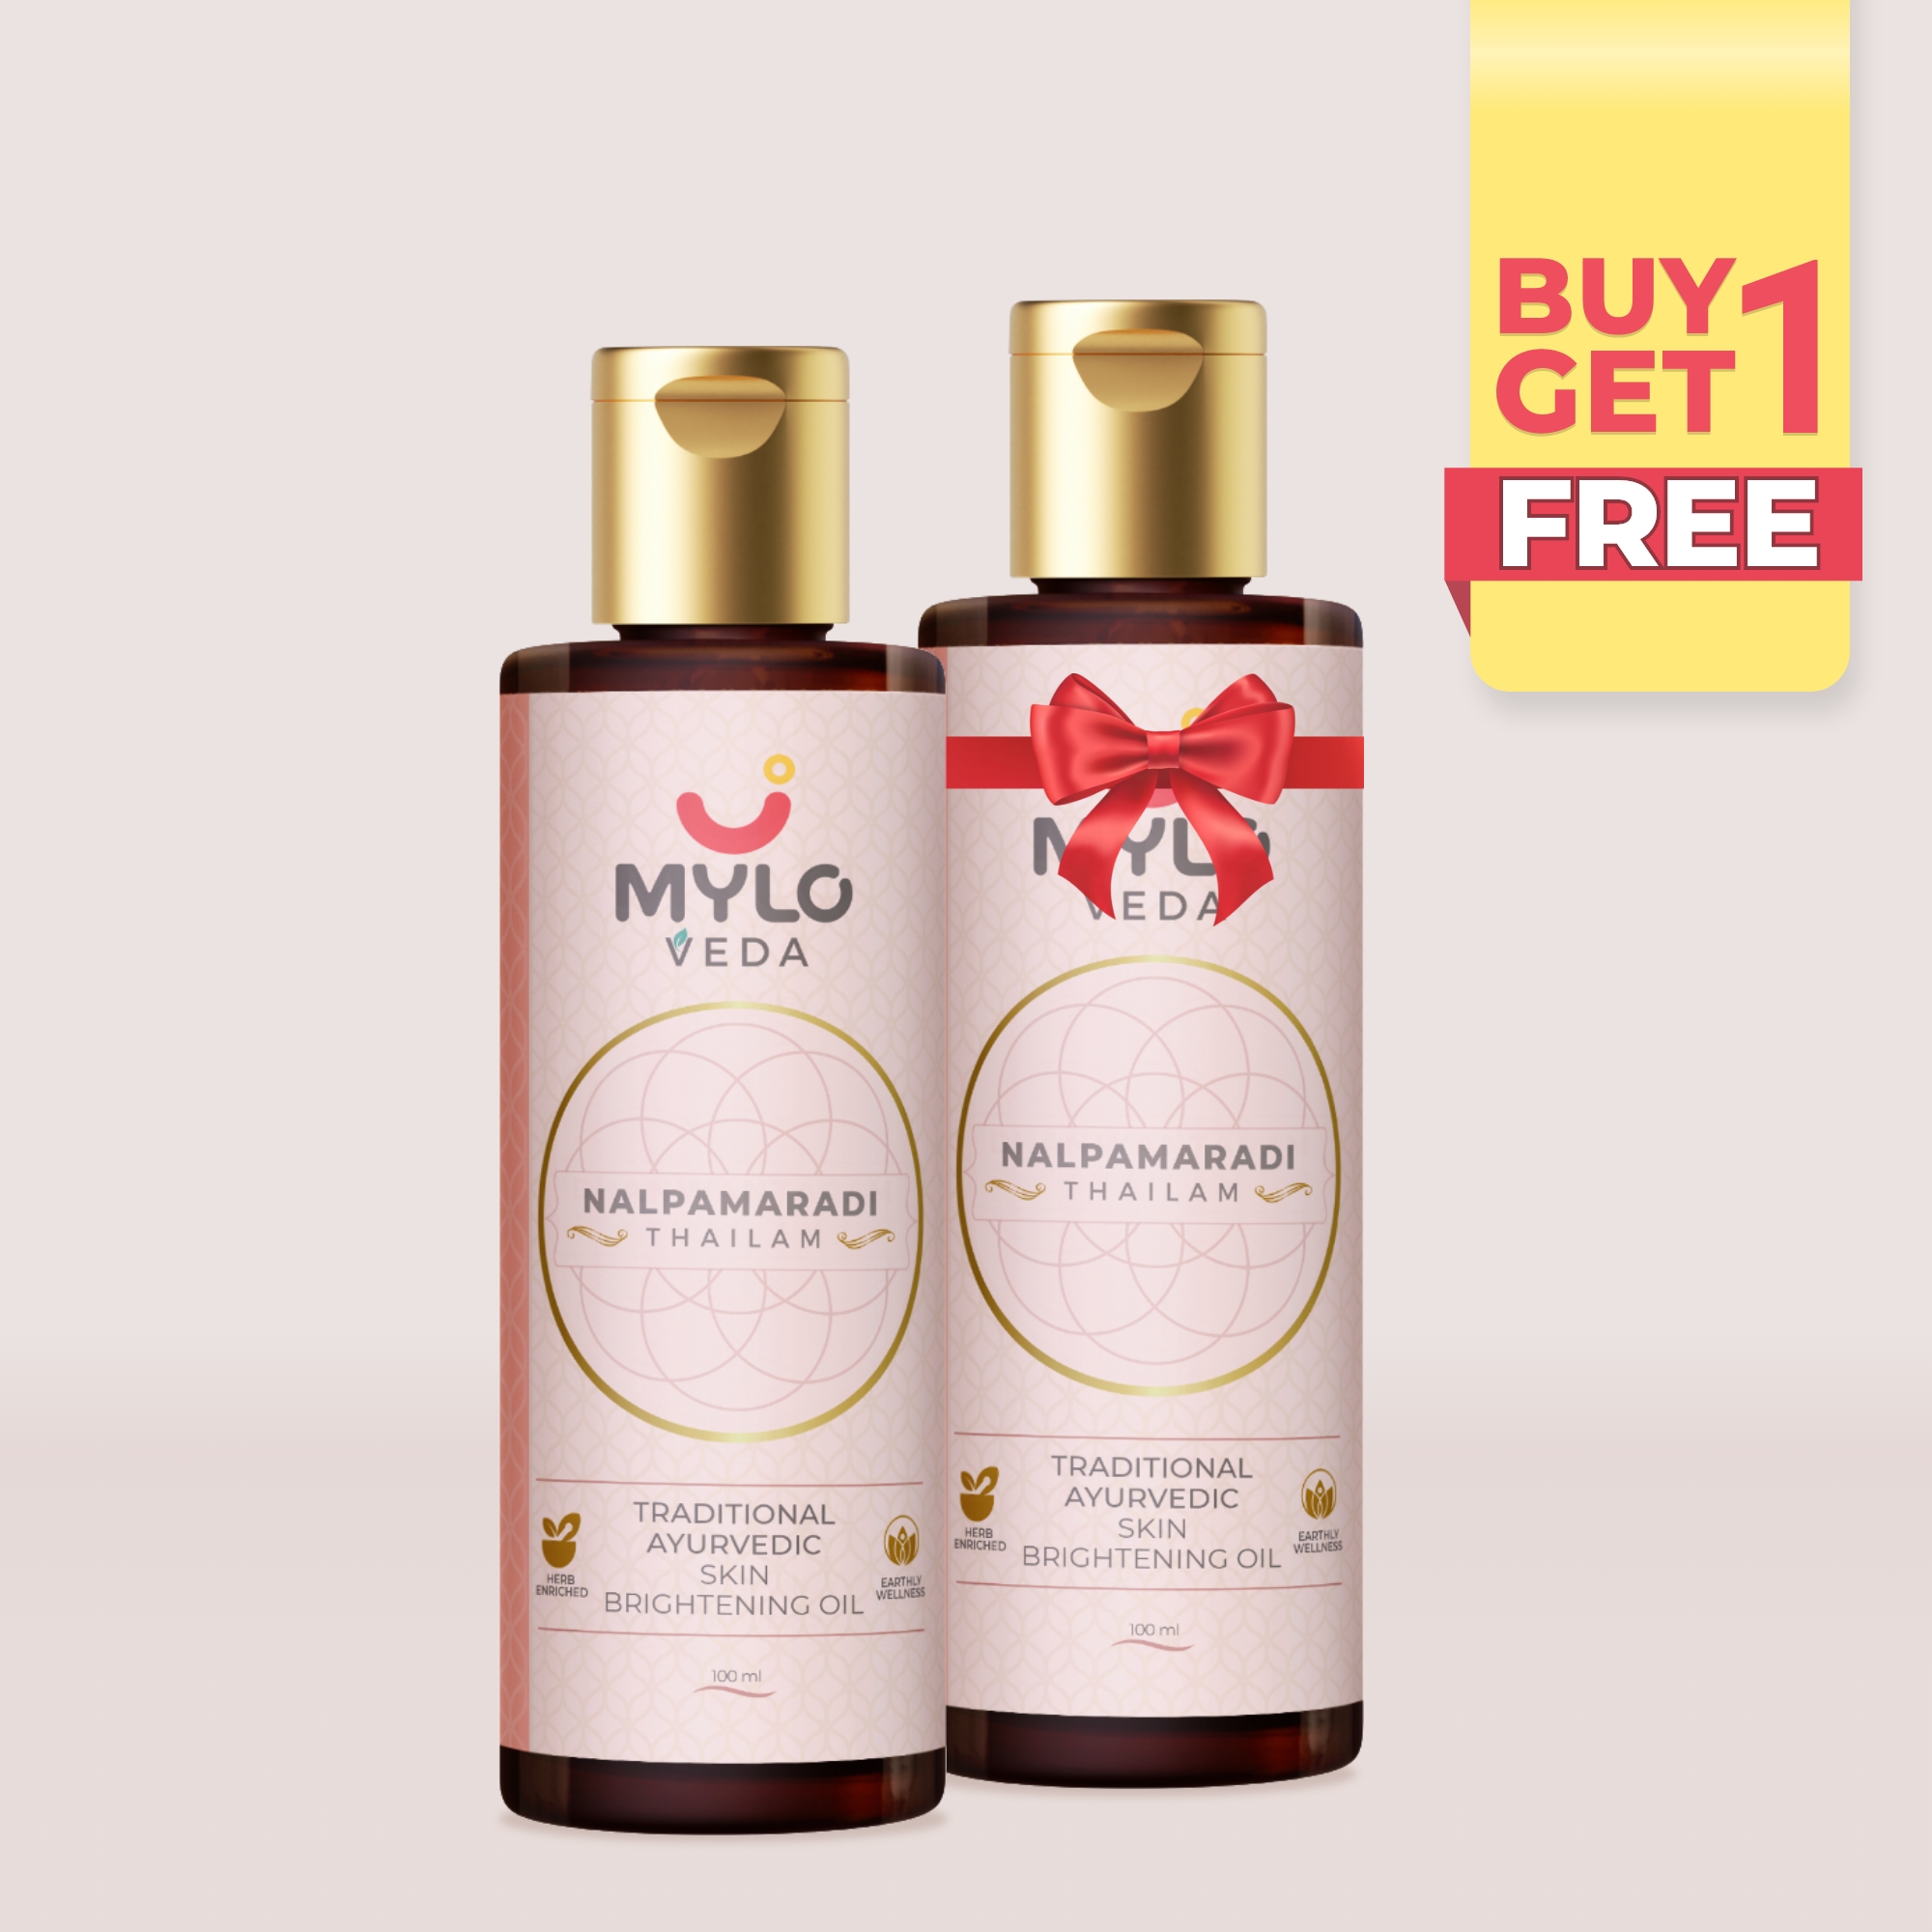 Ayurvedic Skin Brightening & Detanning Oil: Nalpamaradi Thailam (50ml) - Buy 1 Get 1 FREE